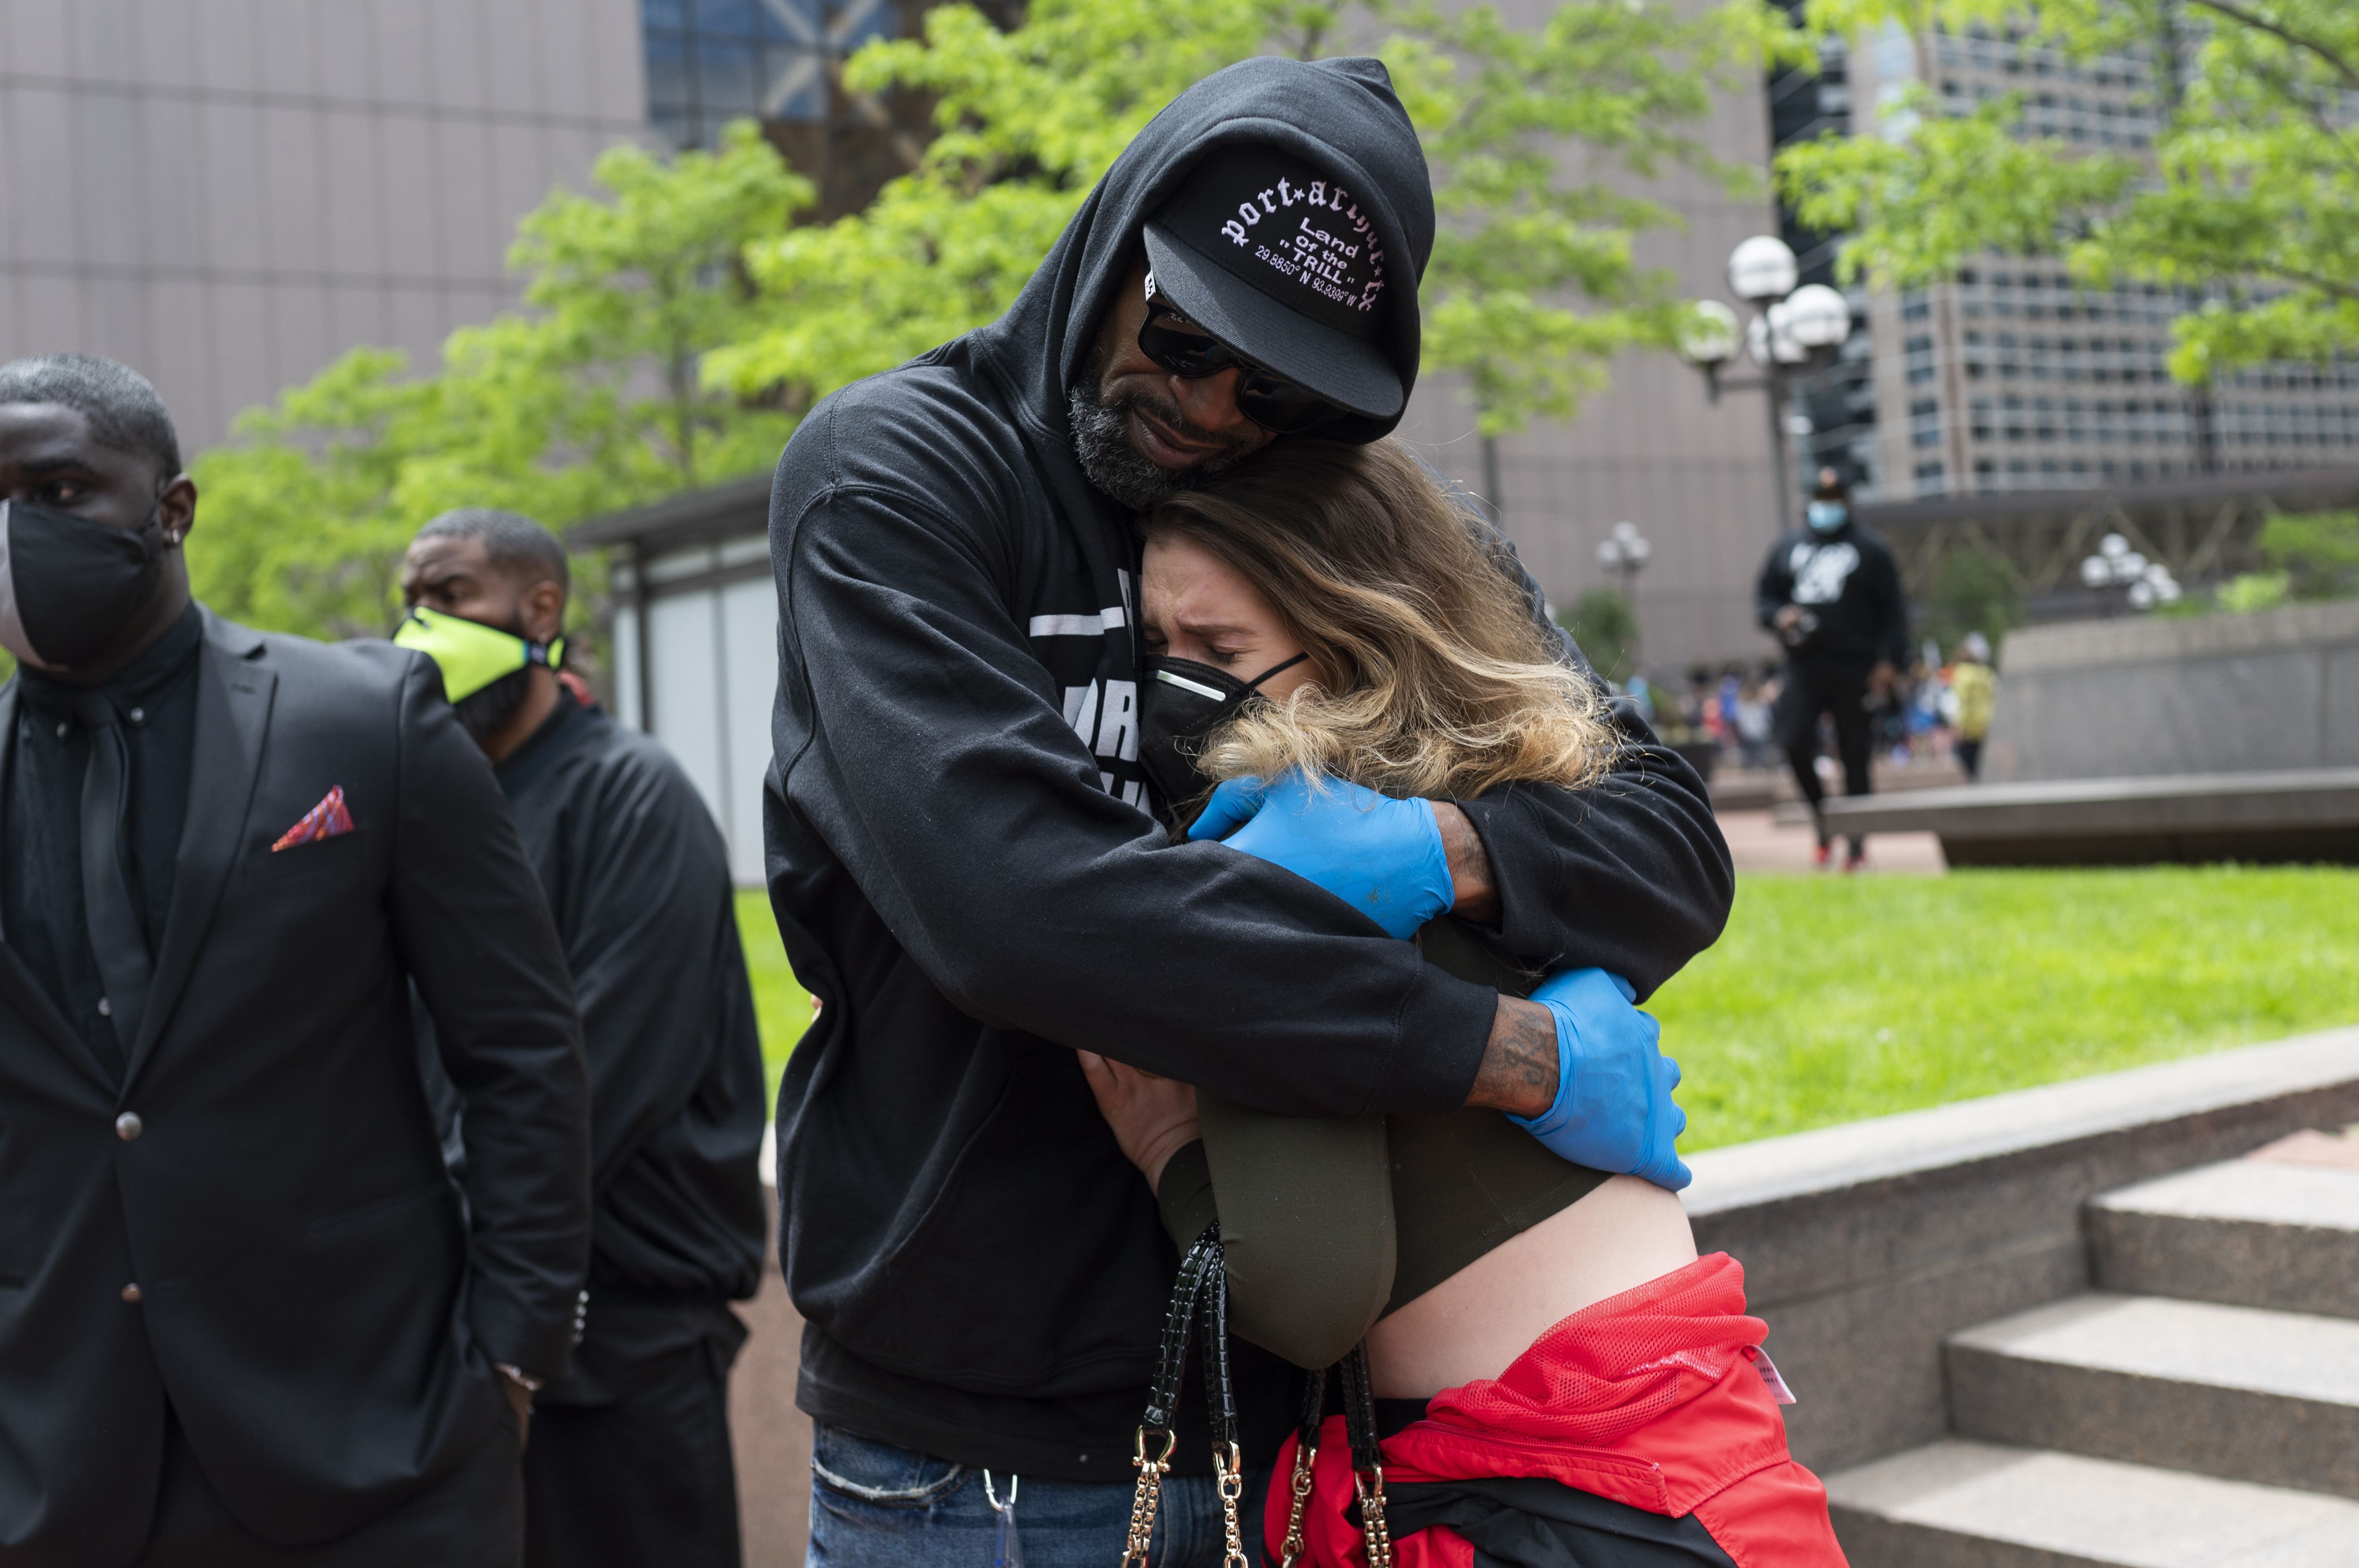 Stephen Jackson hugging a woman